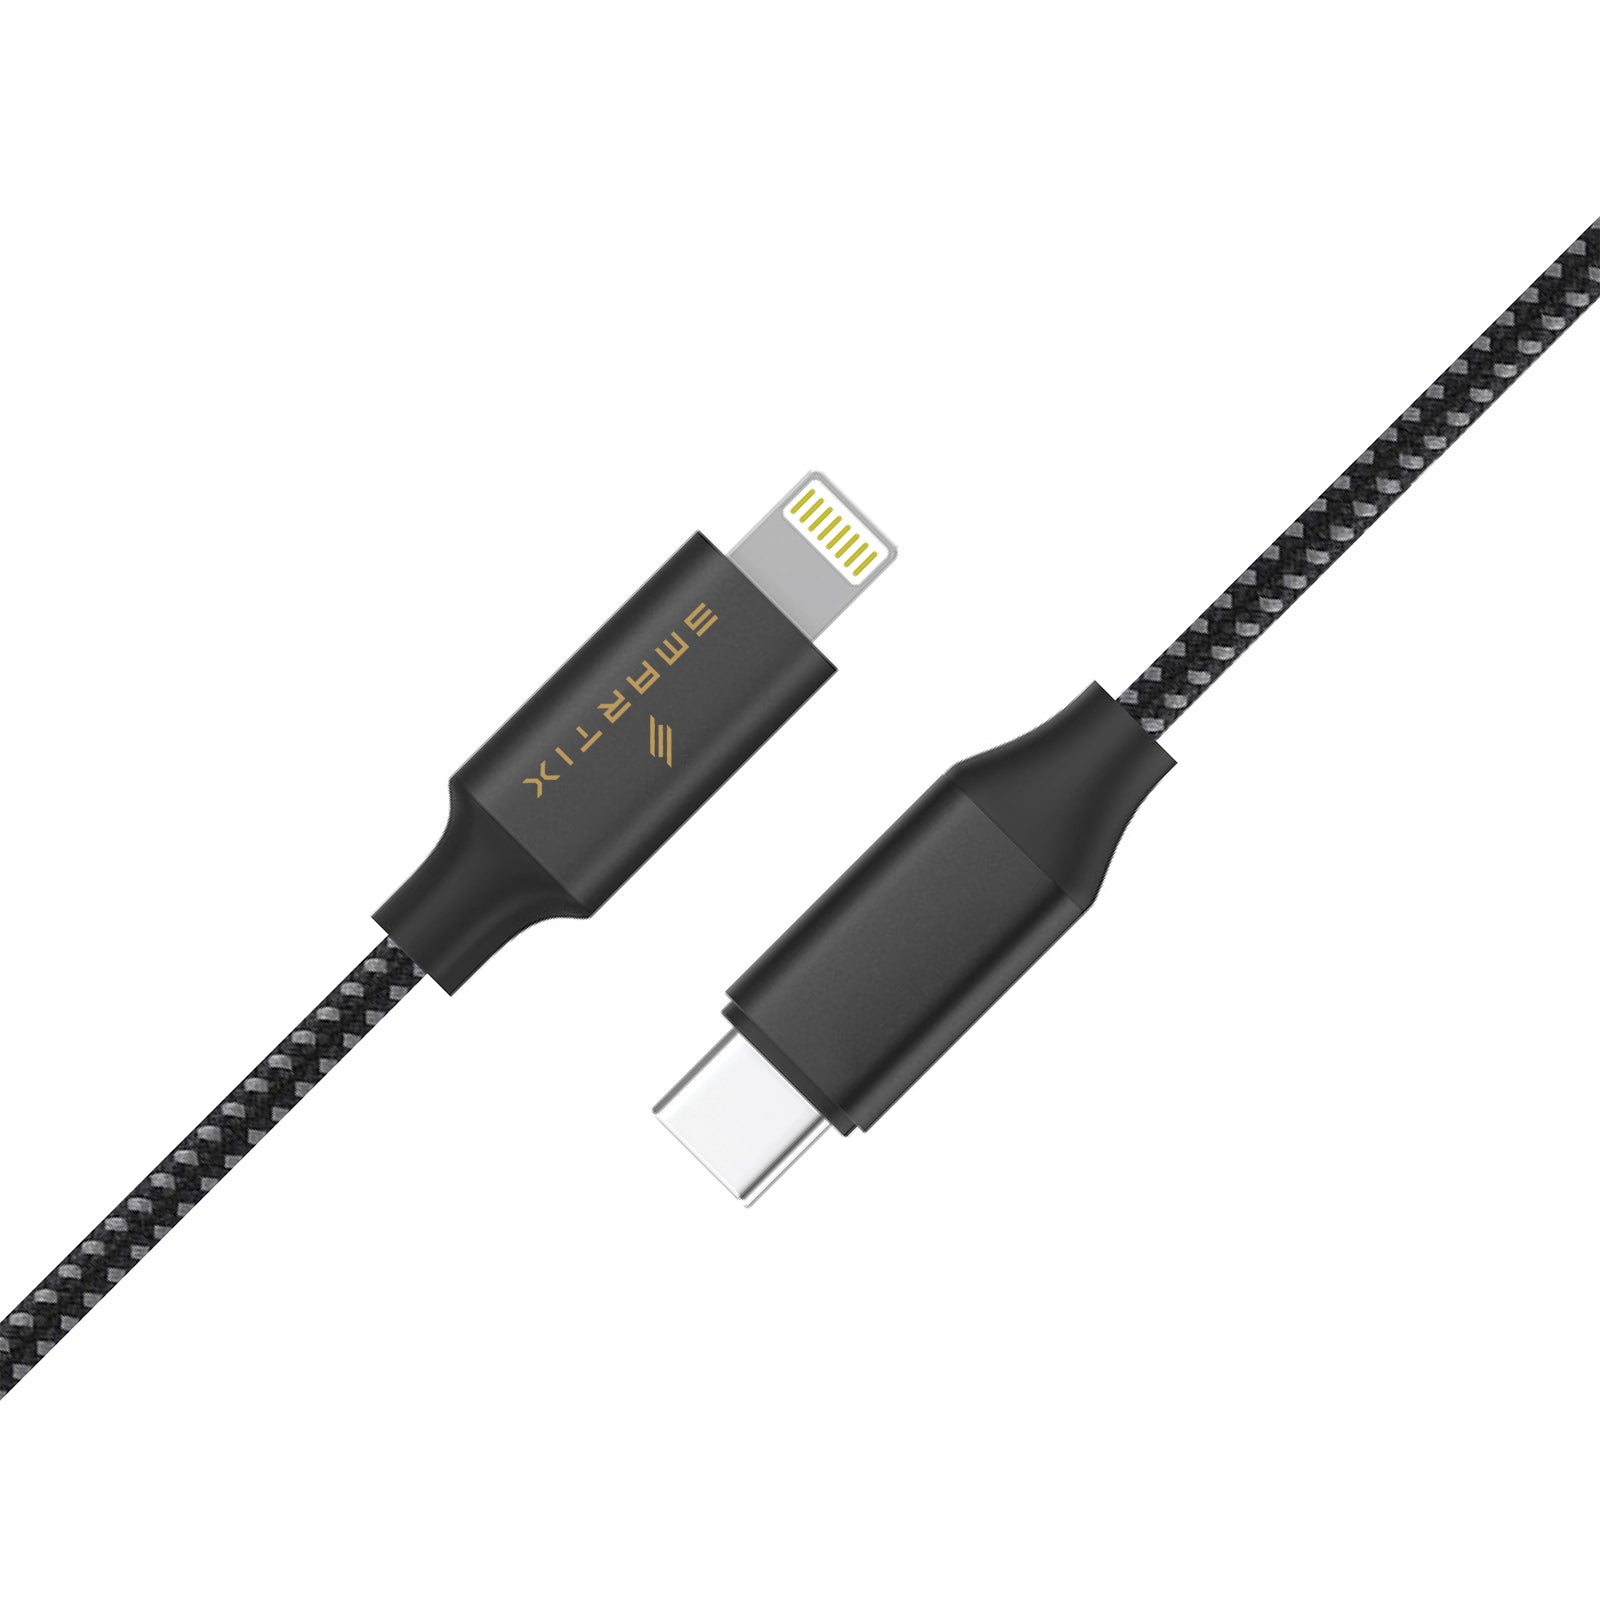 20W Lightning Cable - Smart Infocomm